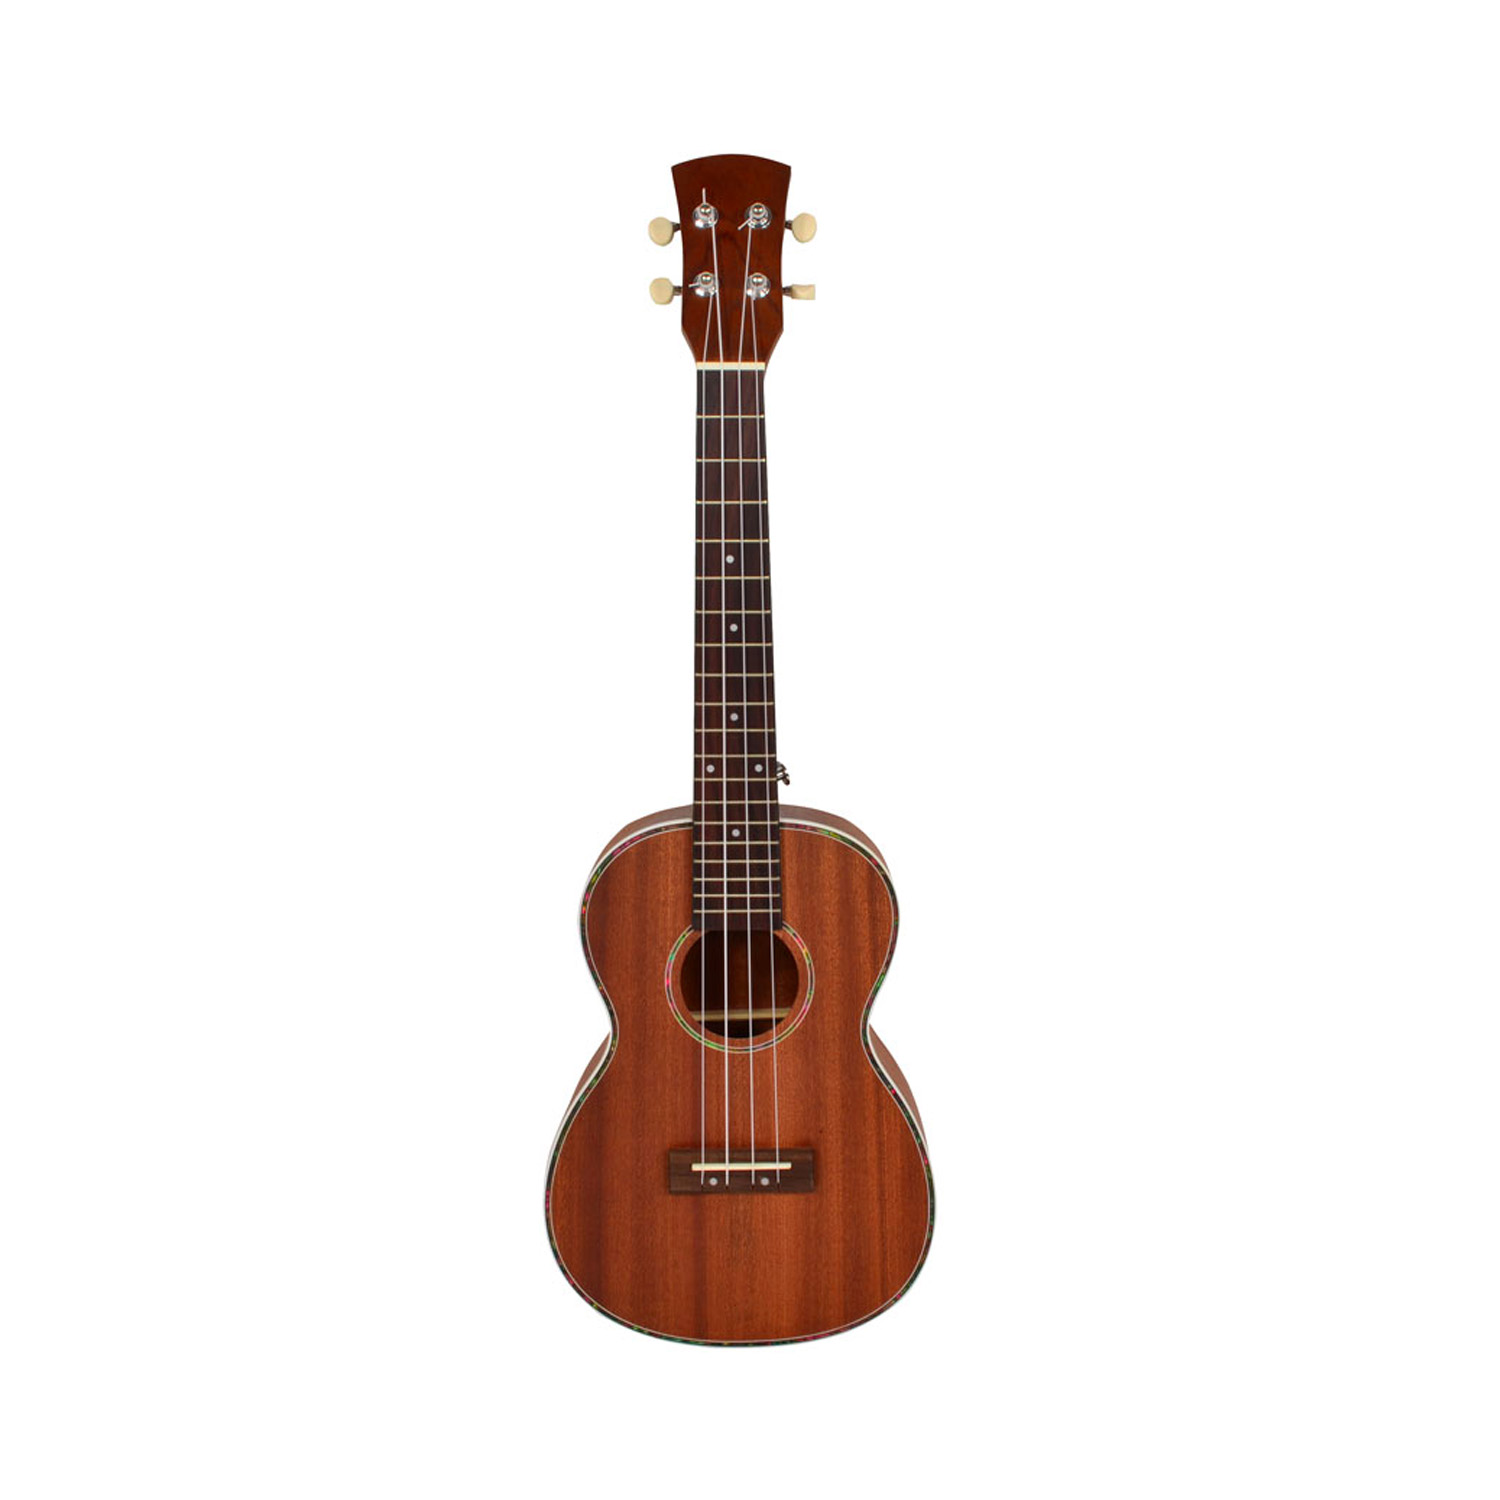 https://www.musicbros.net/media/catalog/product/u/k/ukulele-tenore-sapele-bul003.jpg